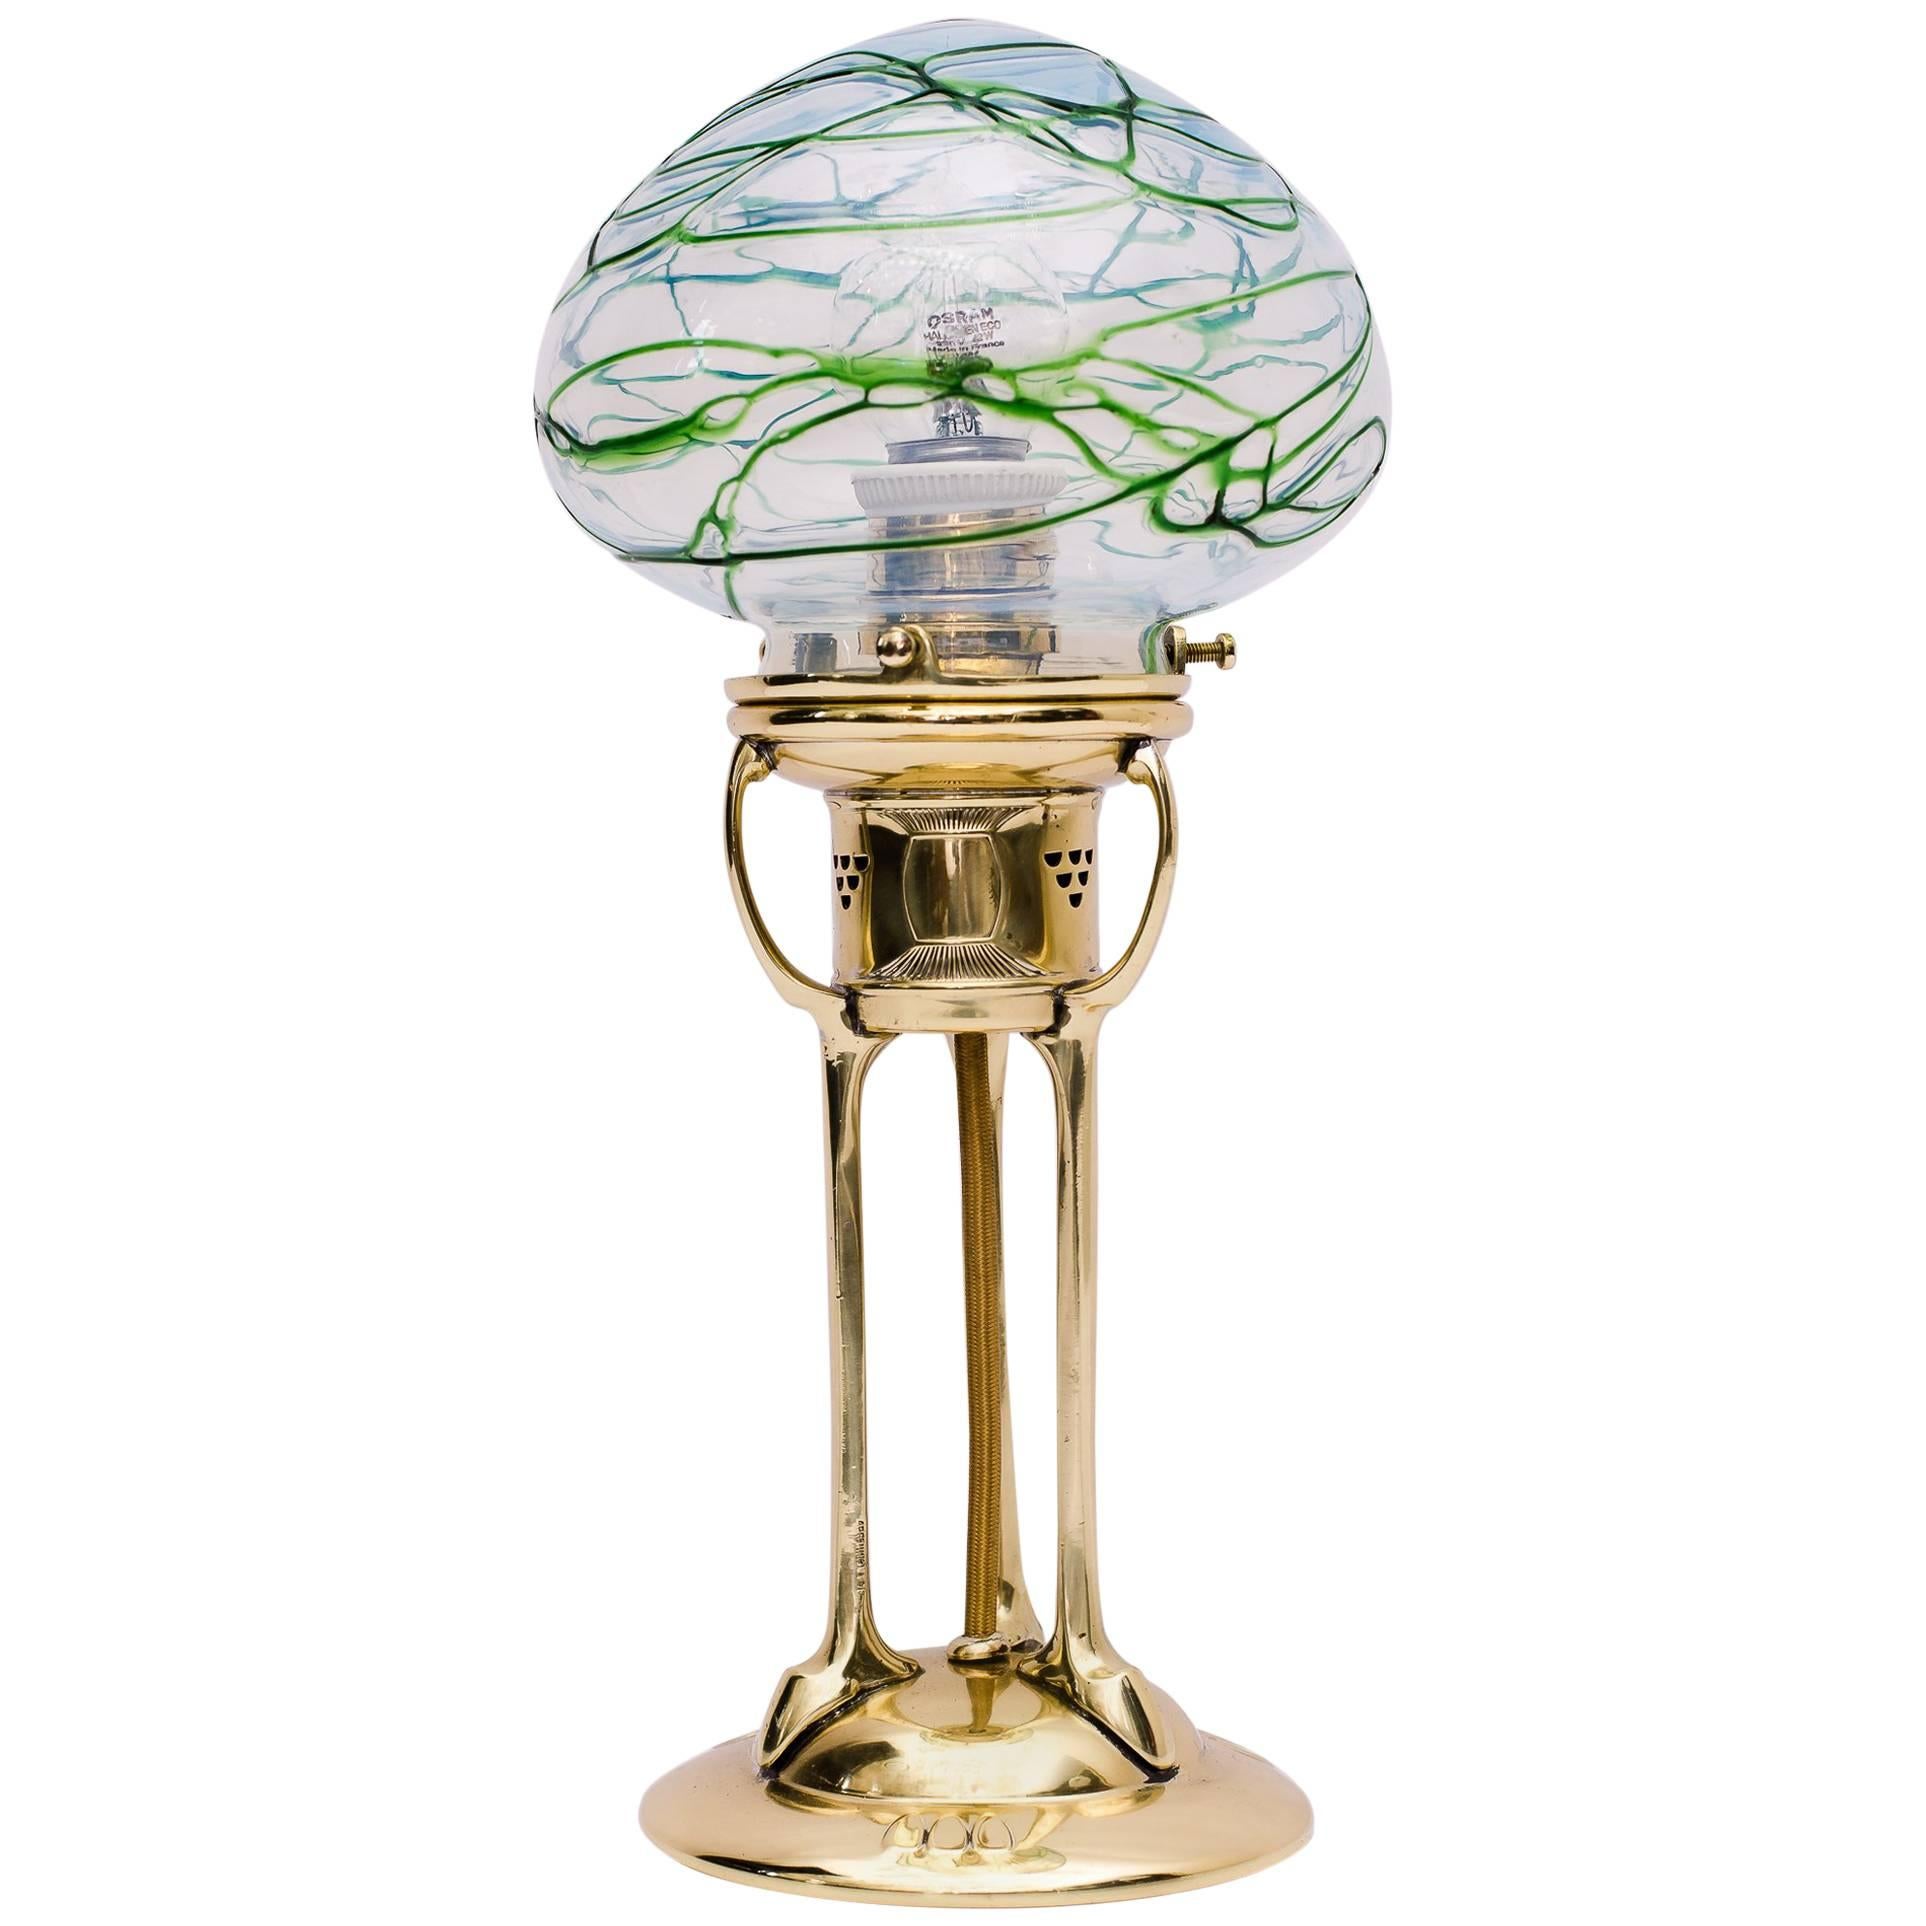 Very Beautiful Table Lamp with Original Pallme König Glass Shade, circa 1908